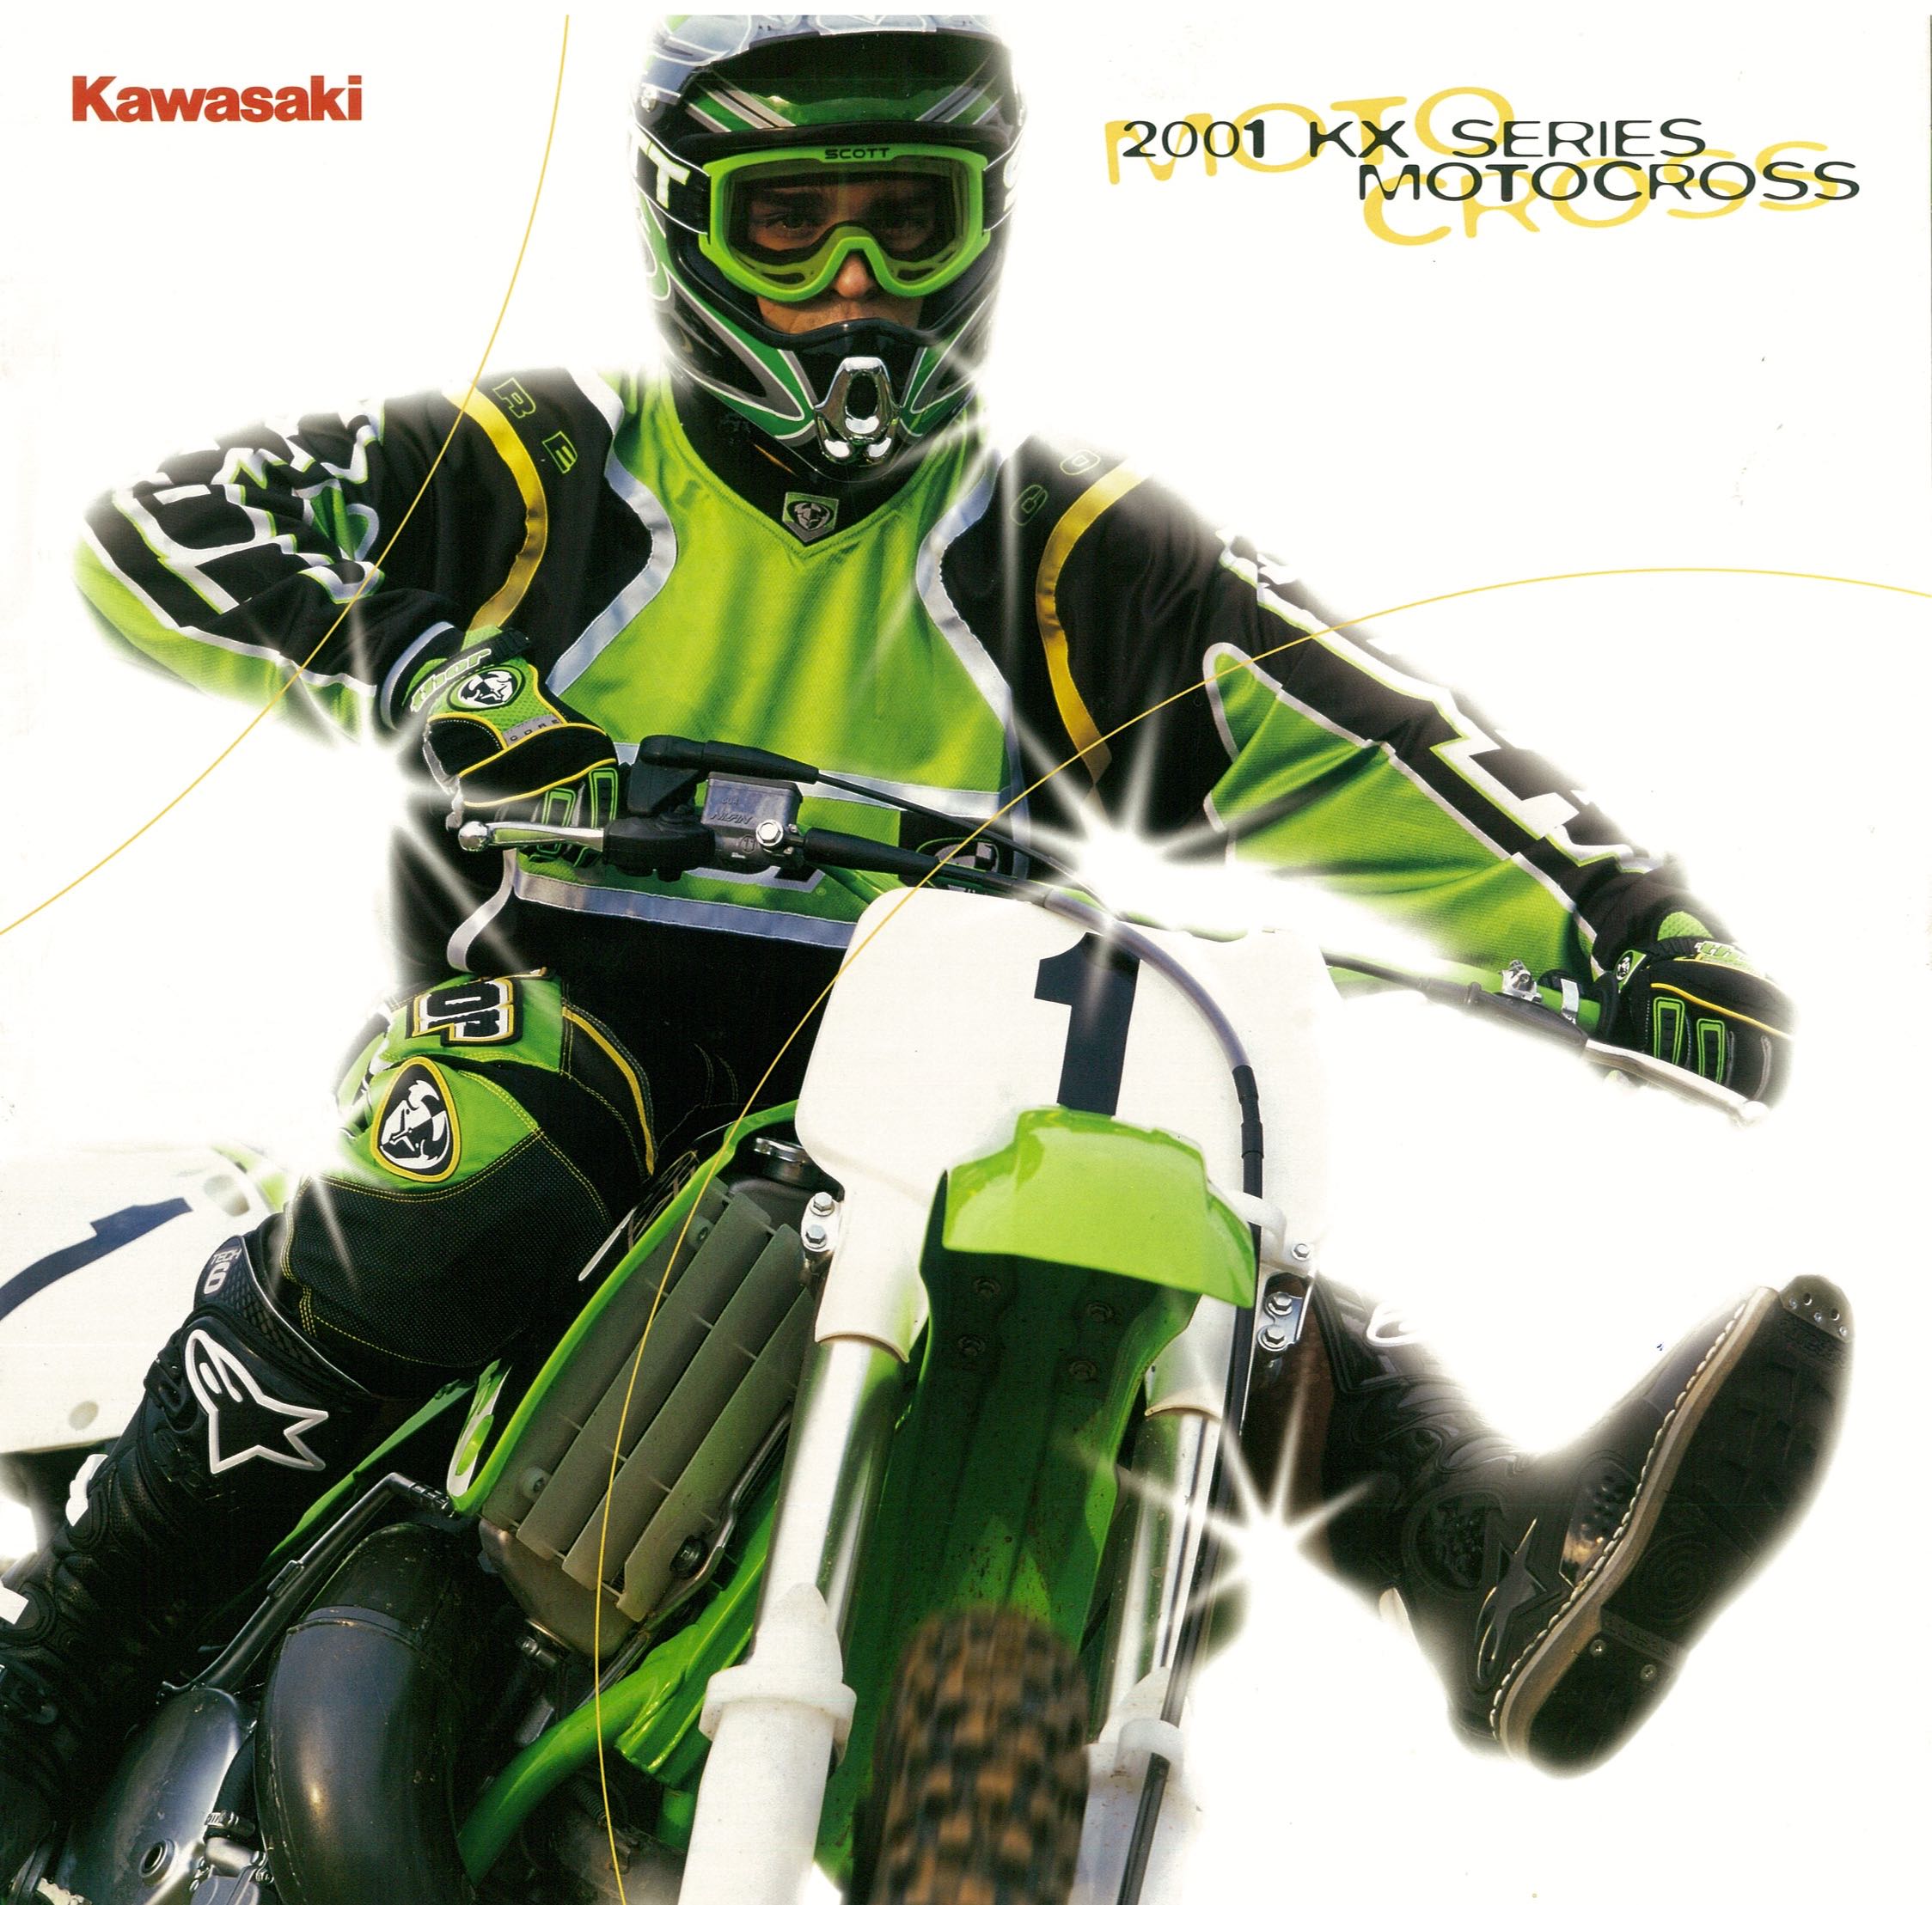 1994 Kawasaki KX60 KX80 KX80-II KX100 Motorcycle Owner's Manual 94 OM KAWASAKI 